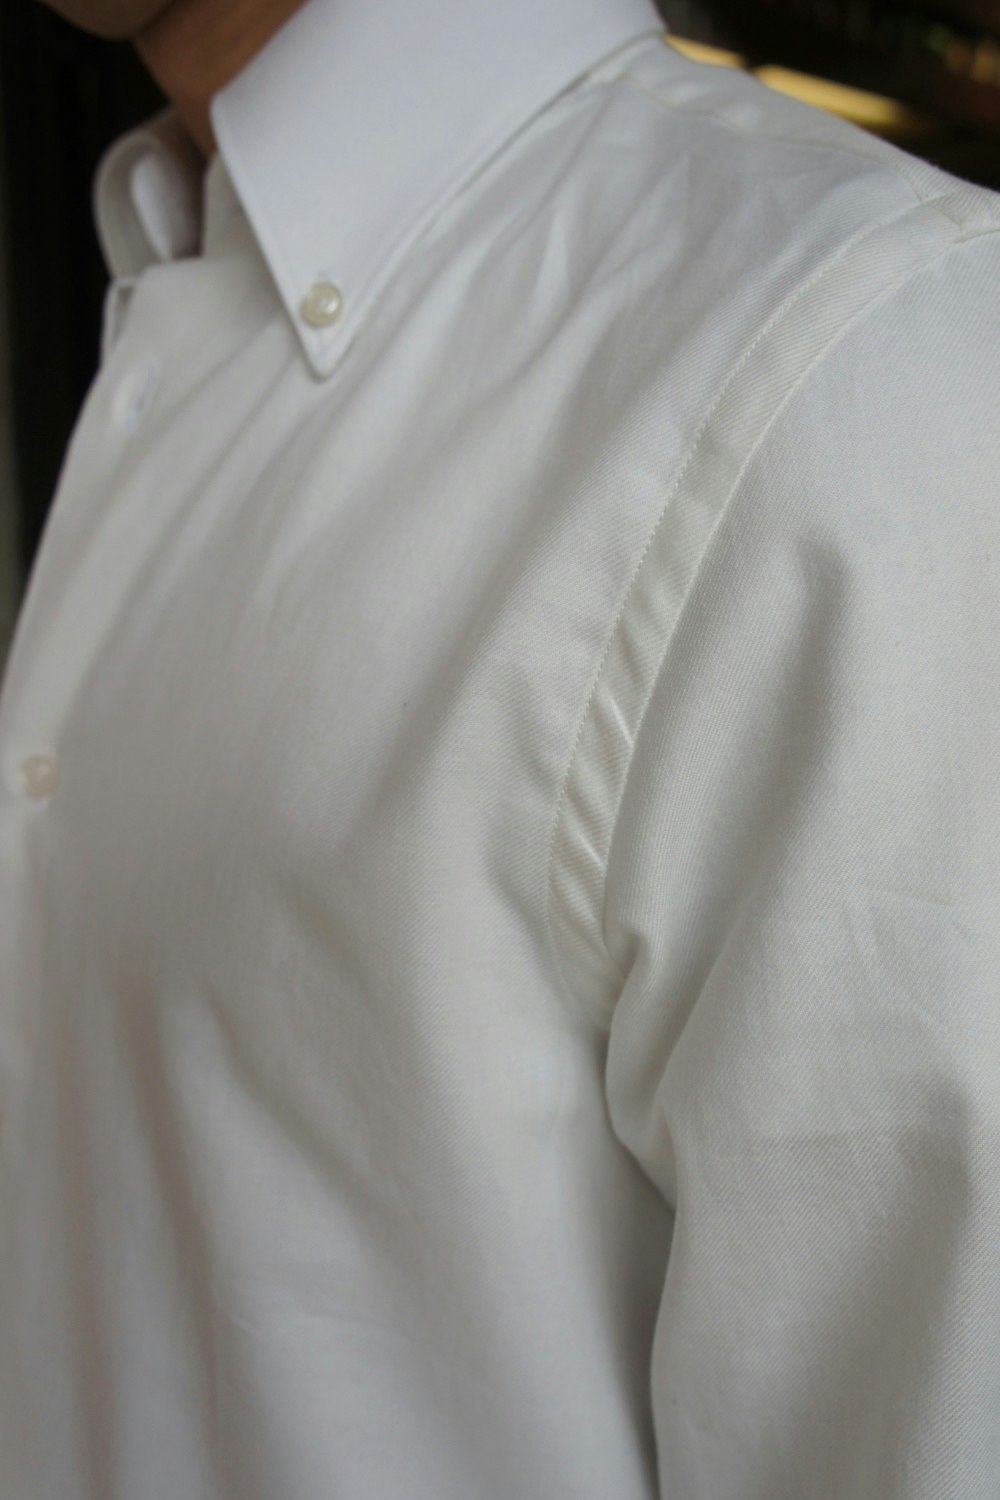 Enfärgad Skjorta i Borstad Bomull - Button Down - White